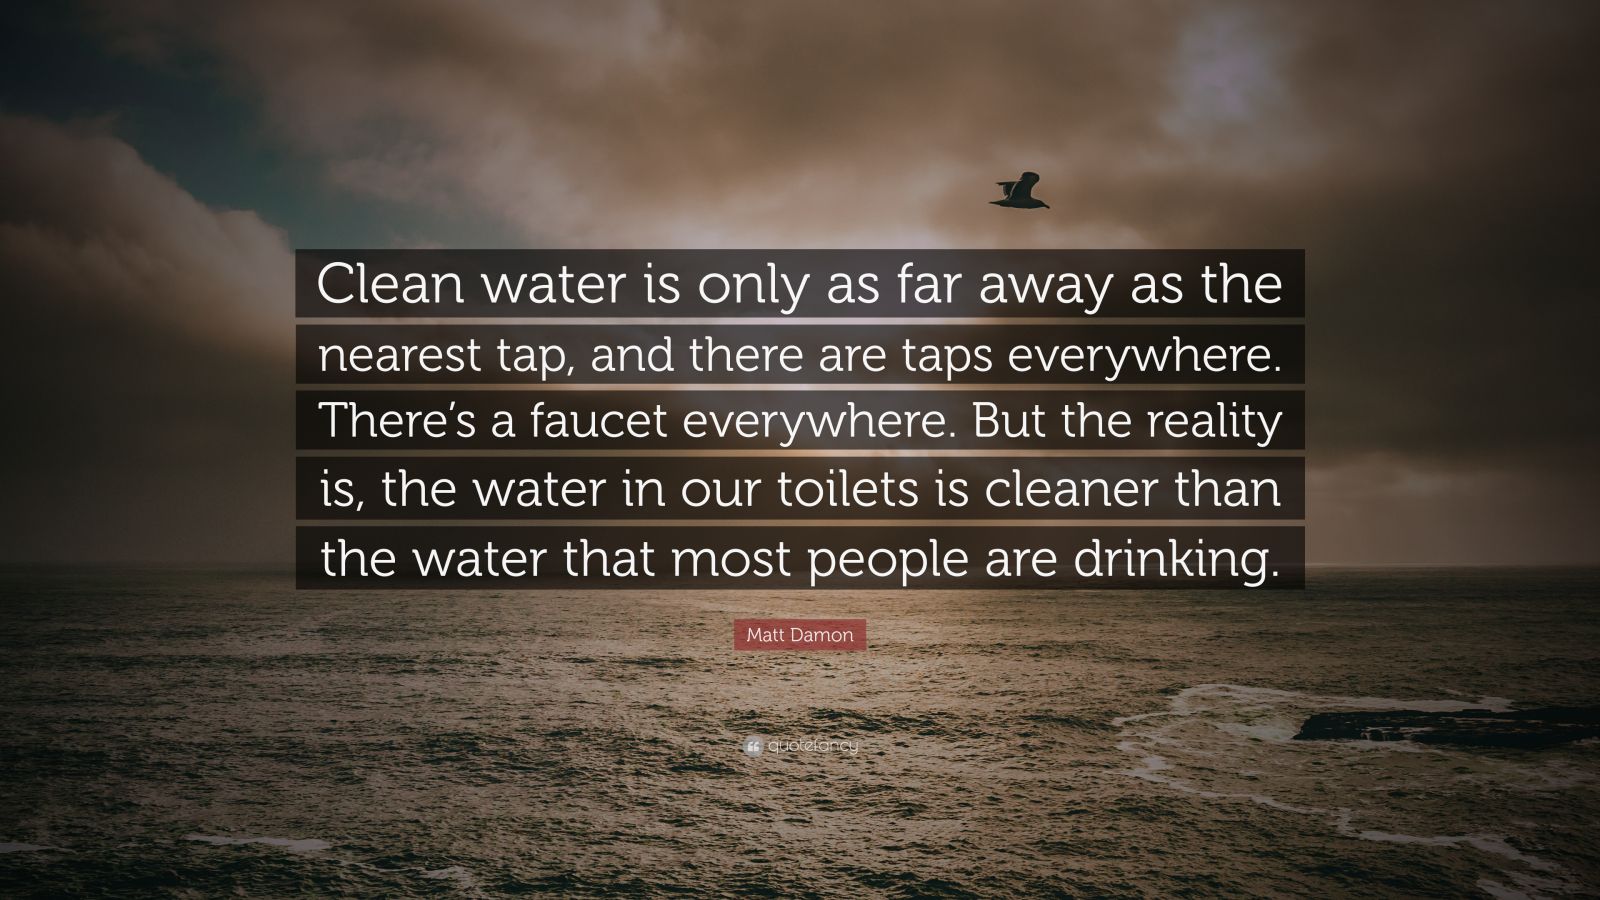 Matt Damon Quote: “Clean water is only as far away as the nearest tap ...